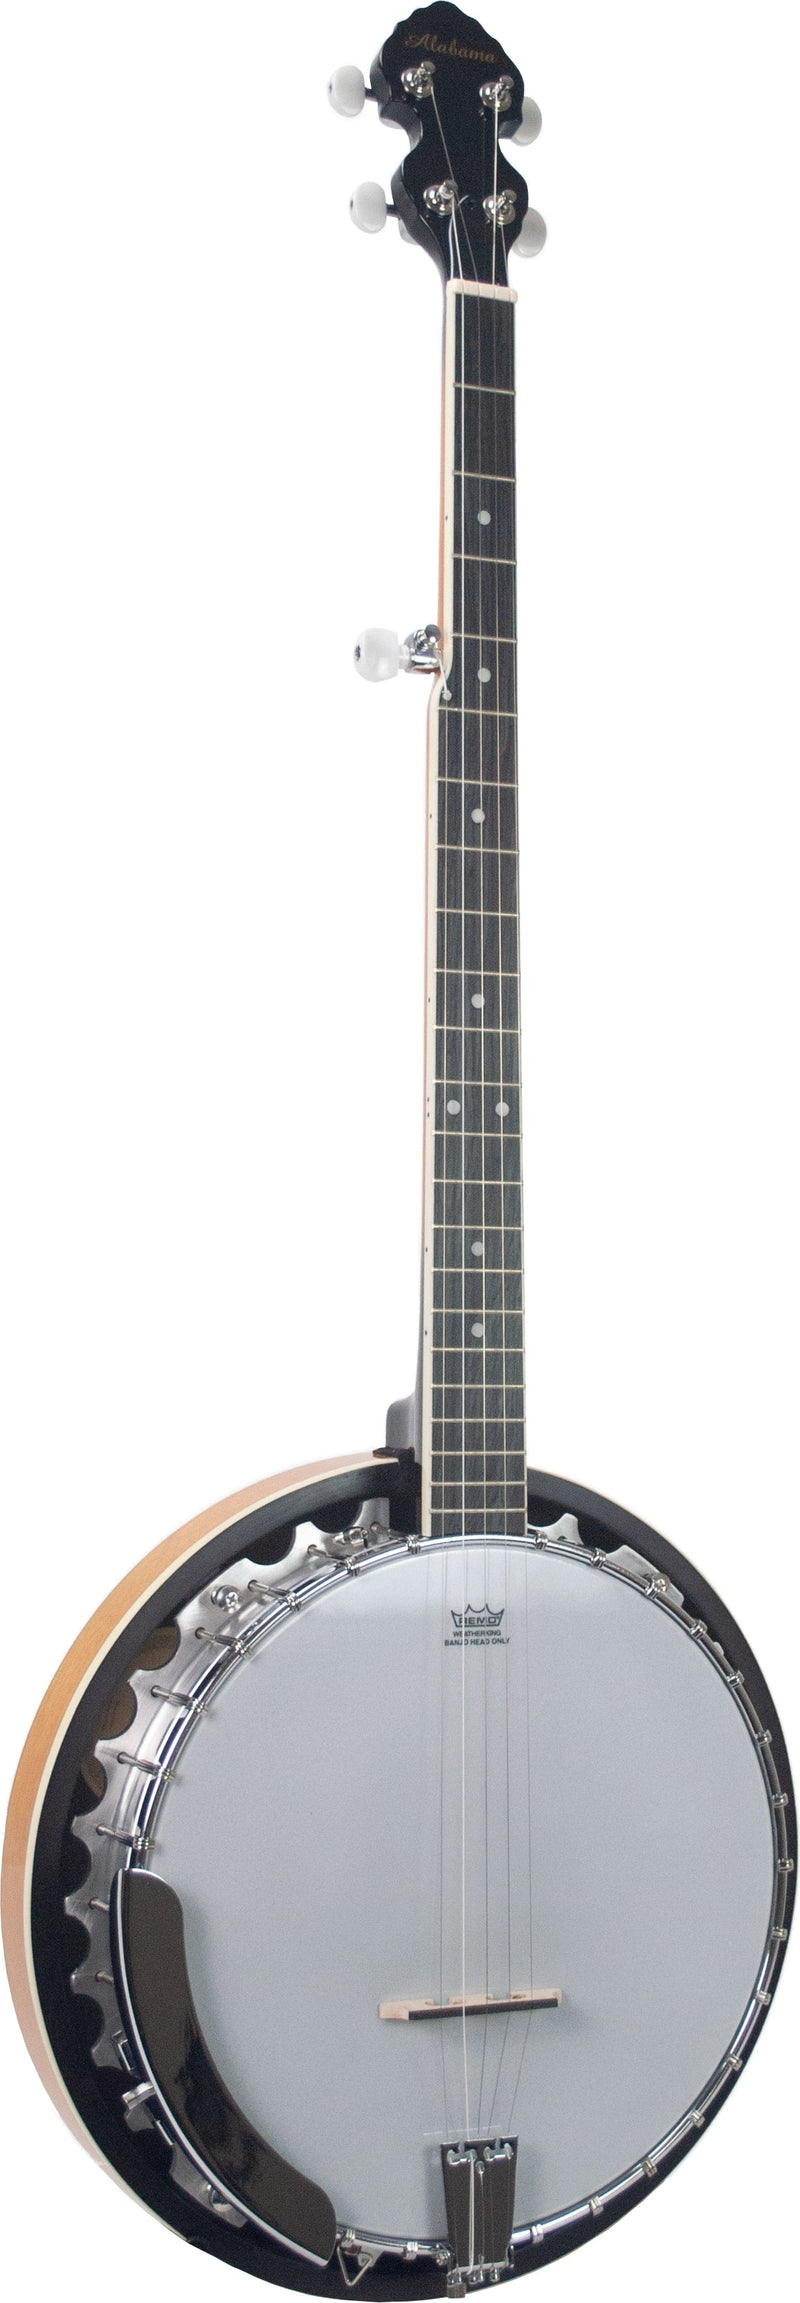 Alabama 5-String Mahogany Banjo, Sunburst Gloss, ALB29 Alabama Instrument for sale canada